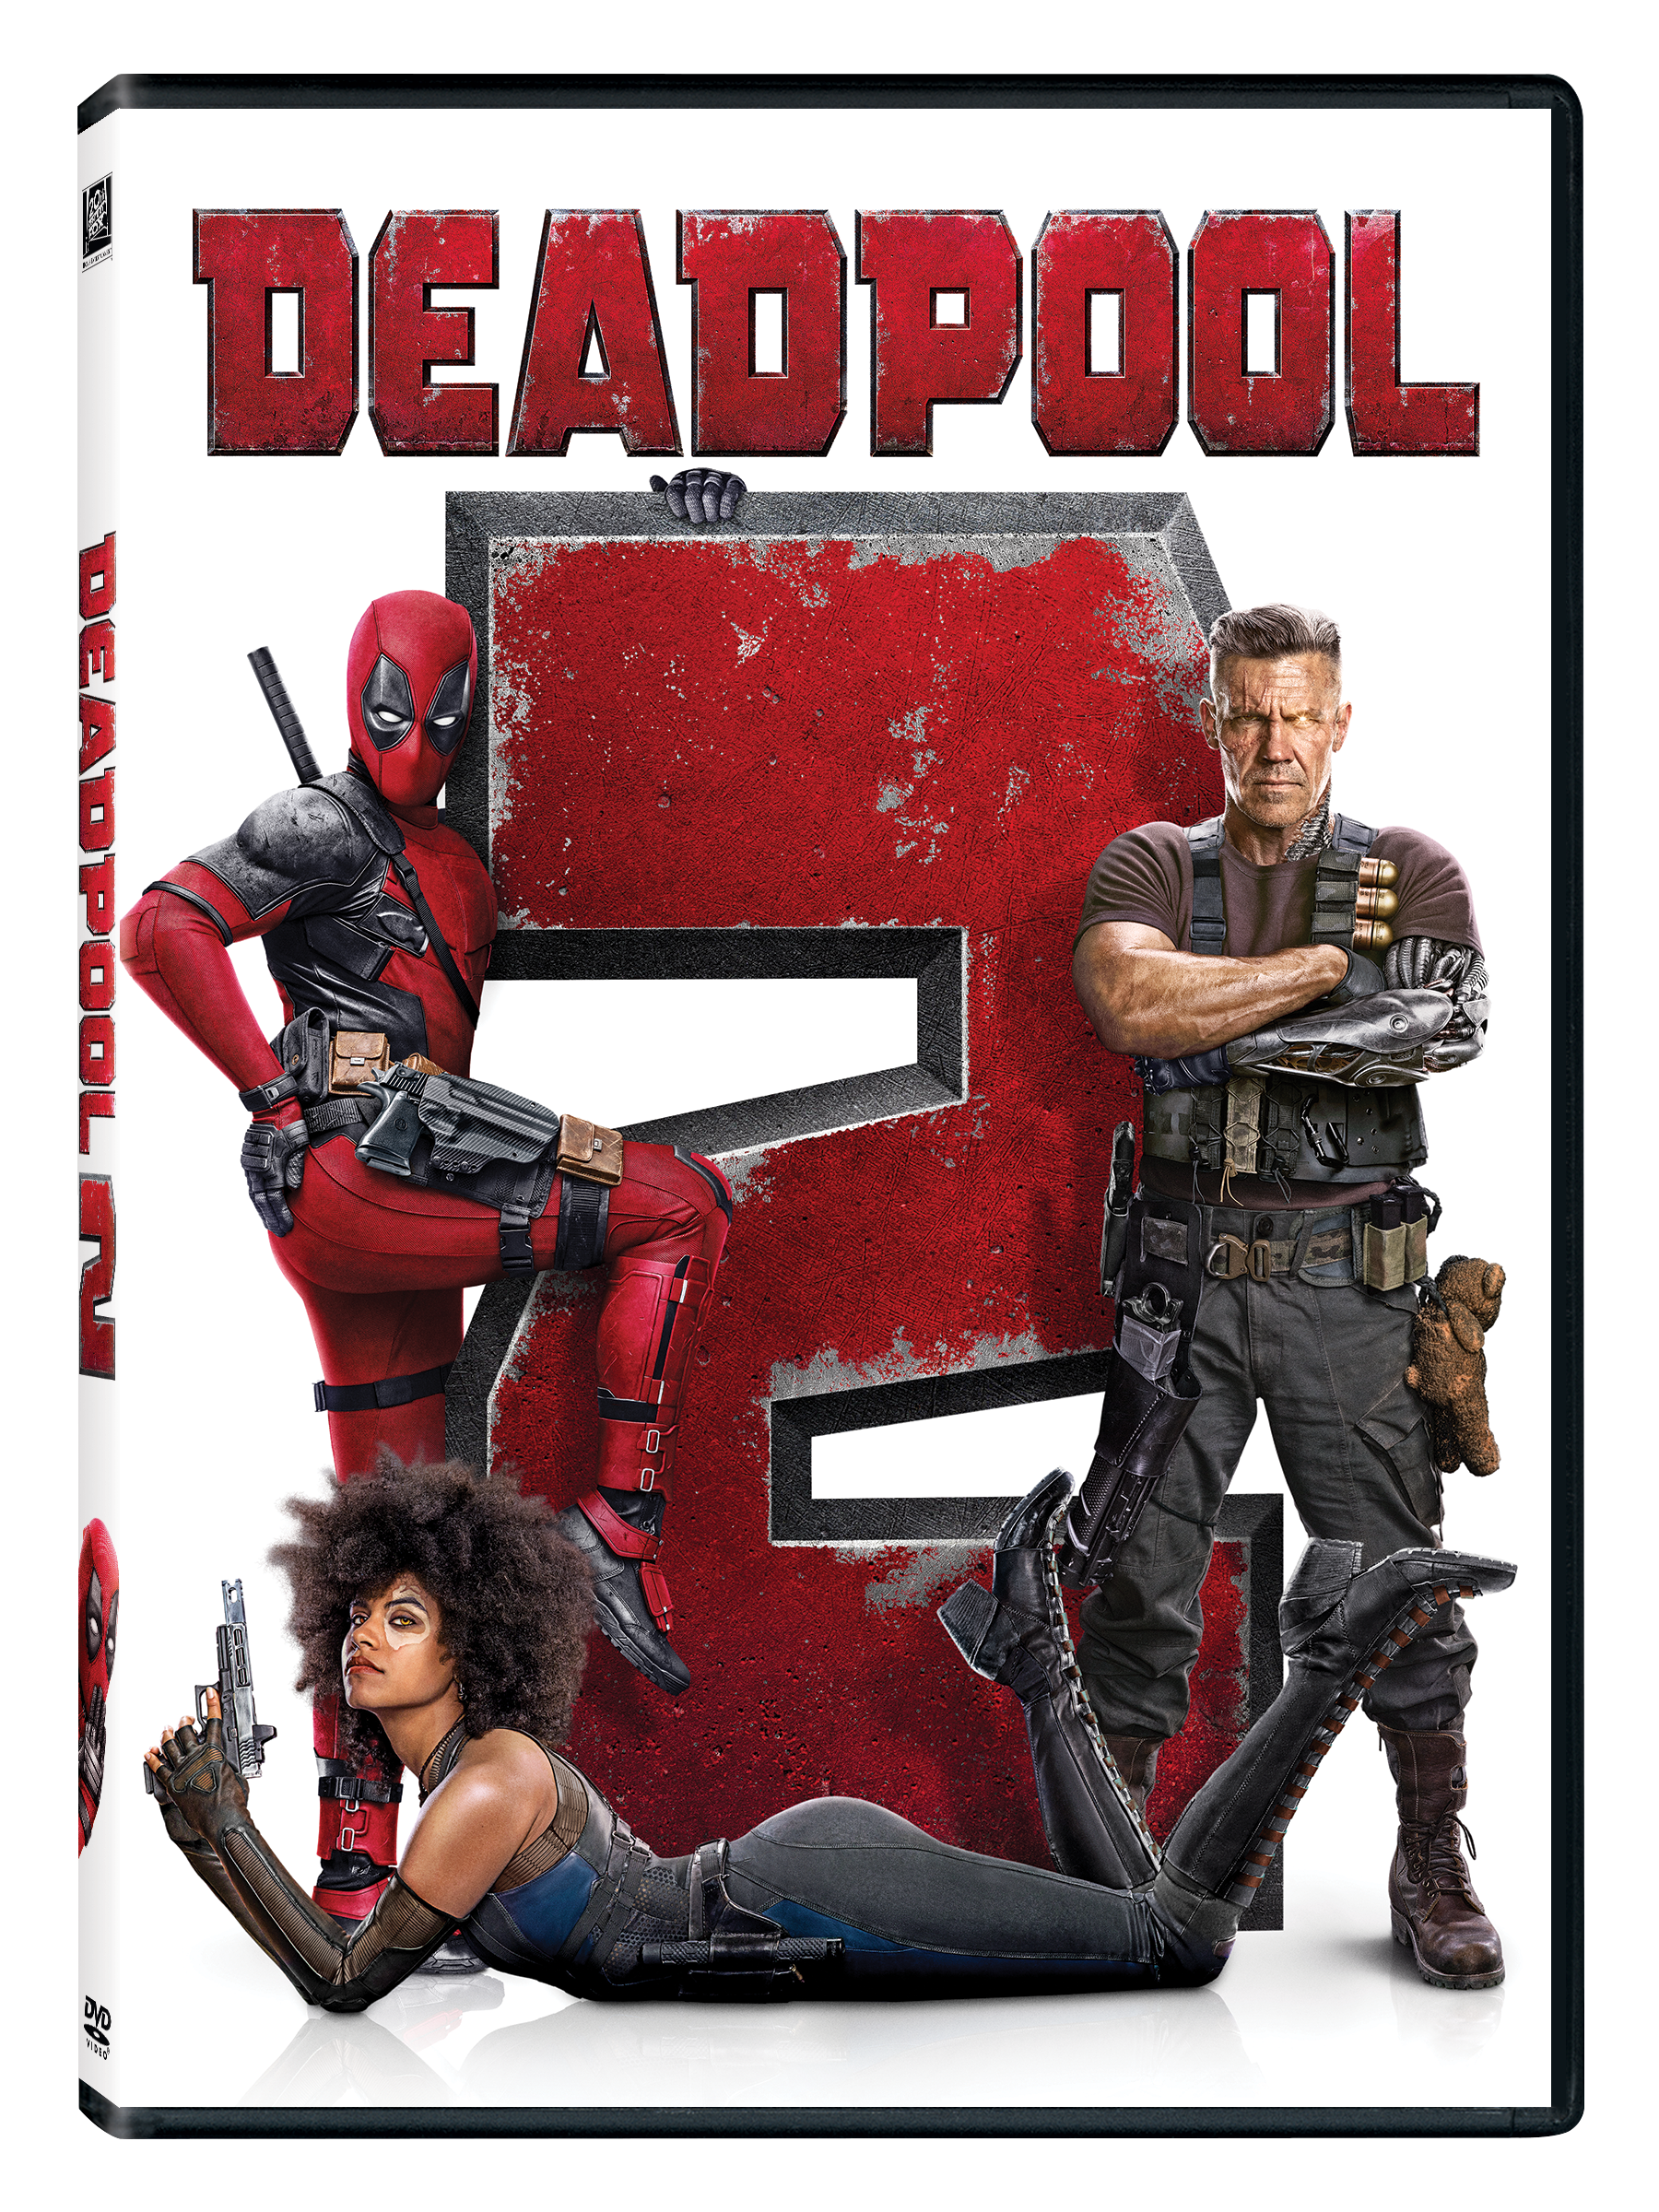 Deadpool 2 DVD cover (20th Century Fox Home Entertainment)